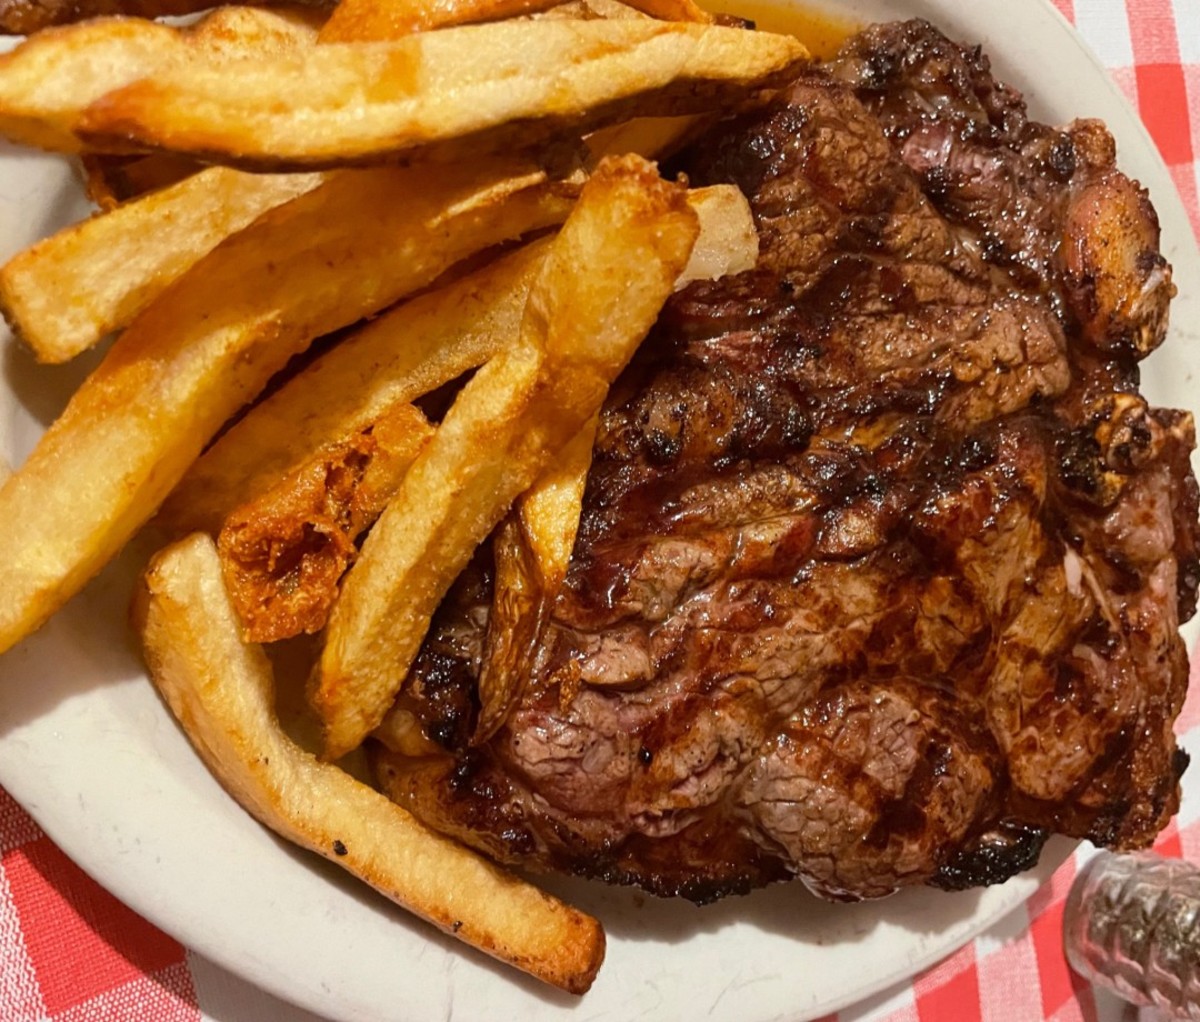 Porterhouse steak with French fries